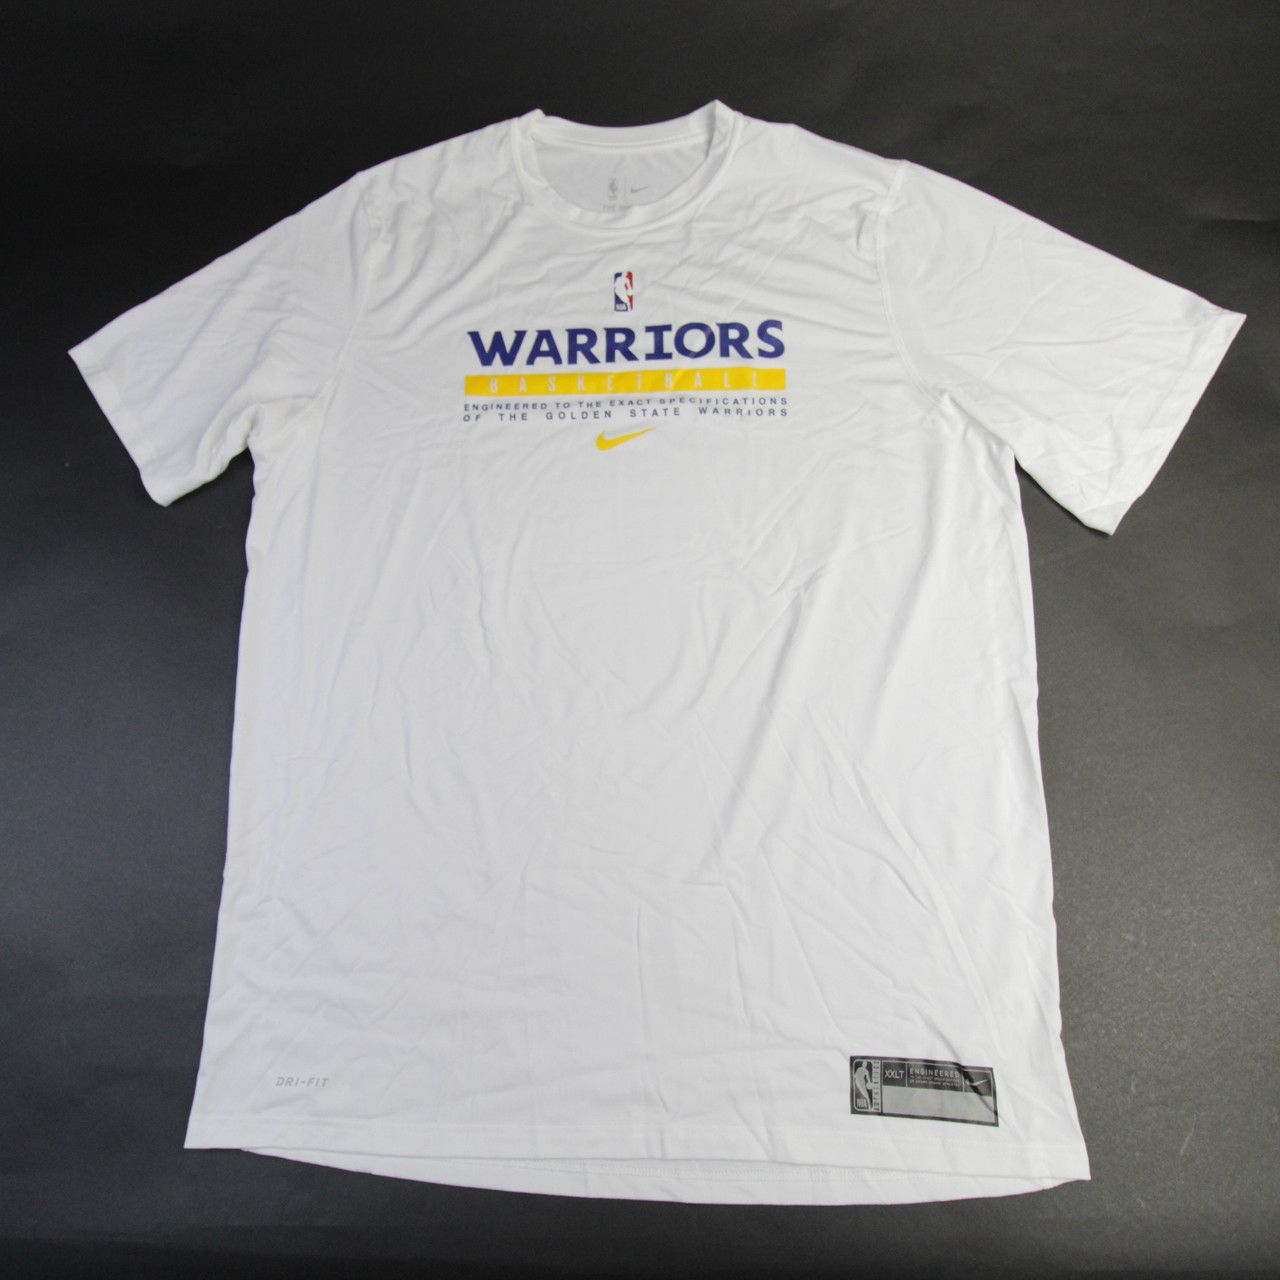 Golden State Warriors Nike NBA Authentics Dri-Fit Short Sleeve